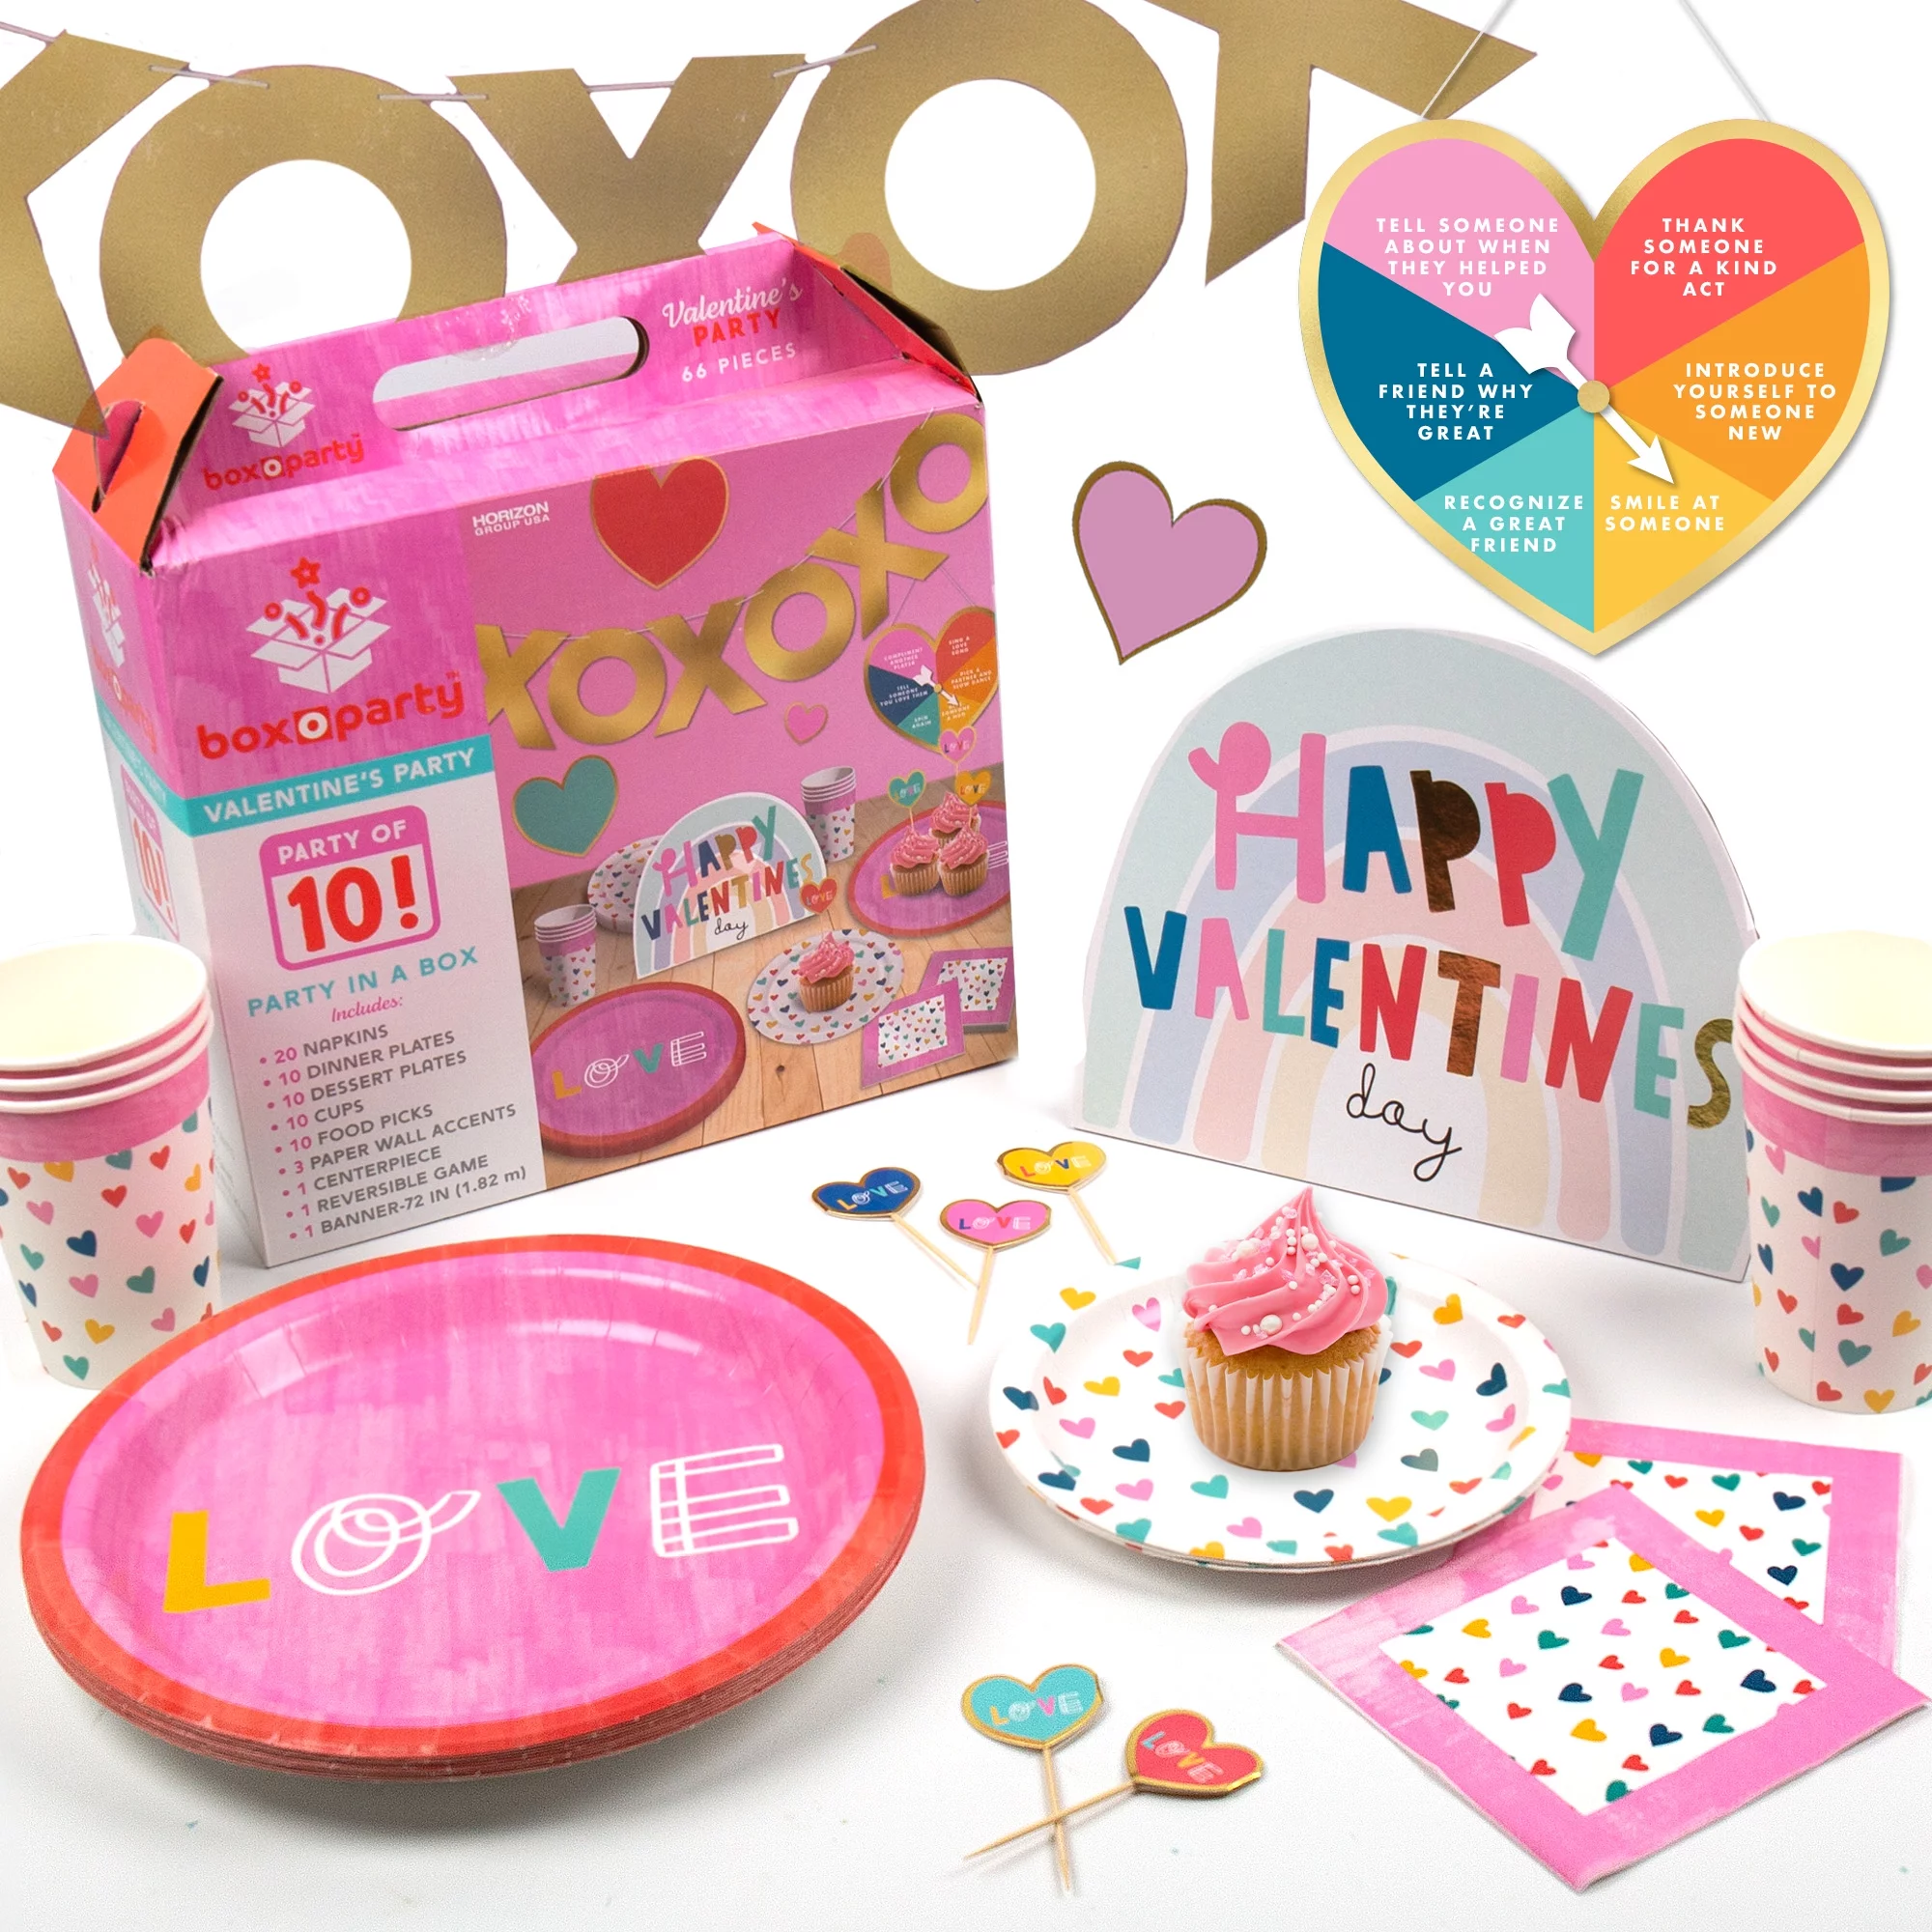 Box O Party Multicolor Valentine’s Day Party In A Box